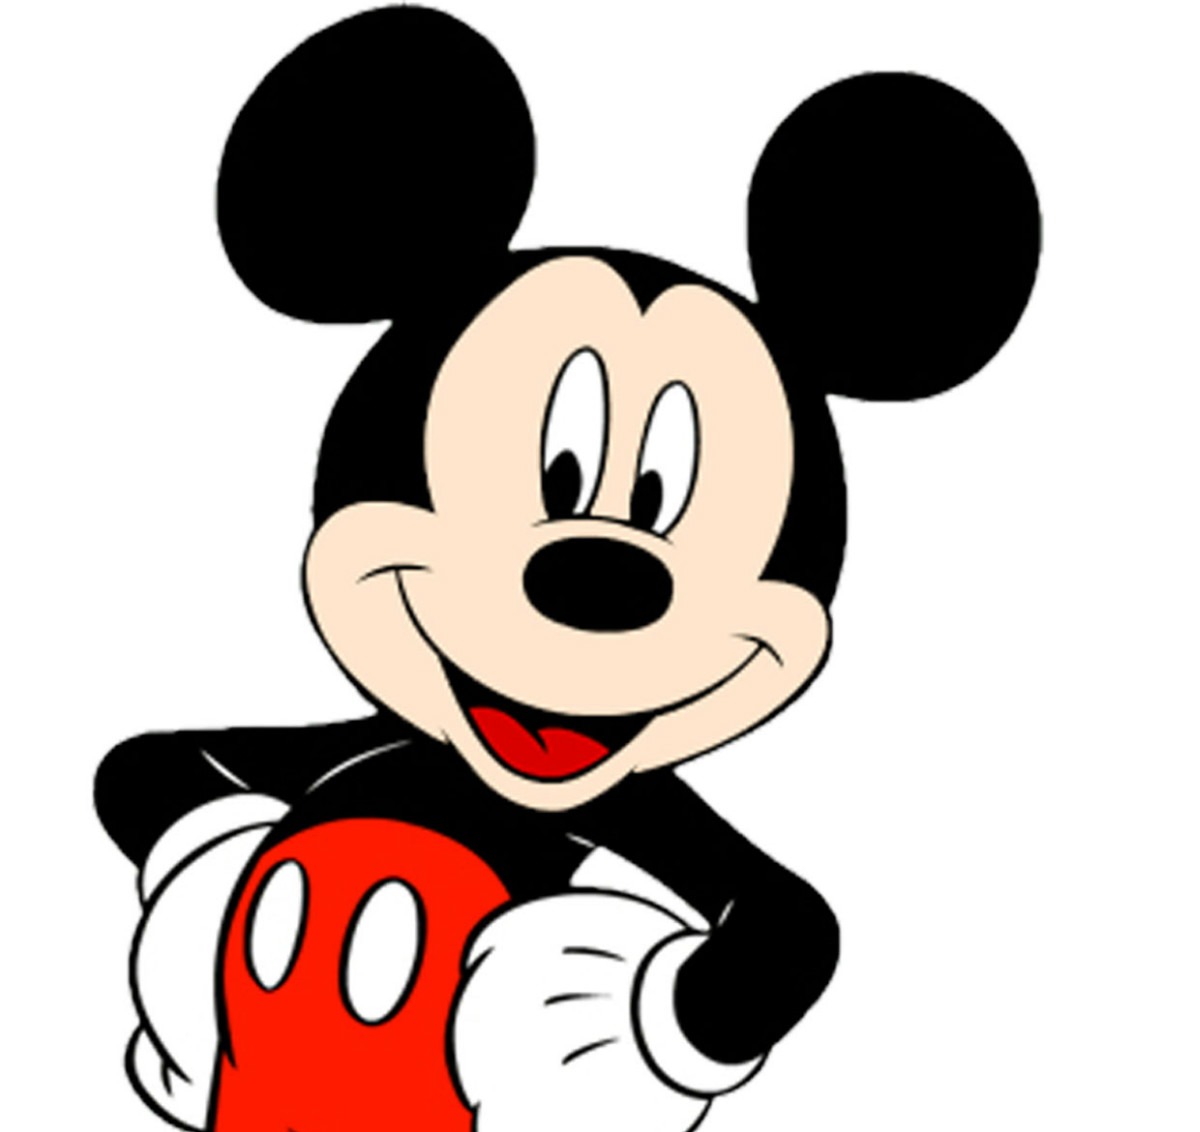 Mickey mouse cartoon picture free kidsloring europe travel jpg